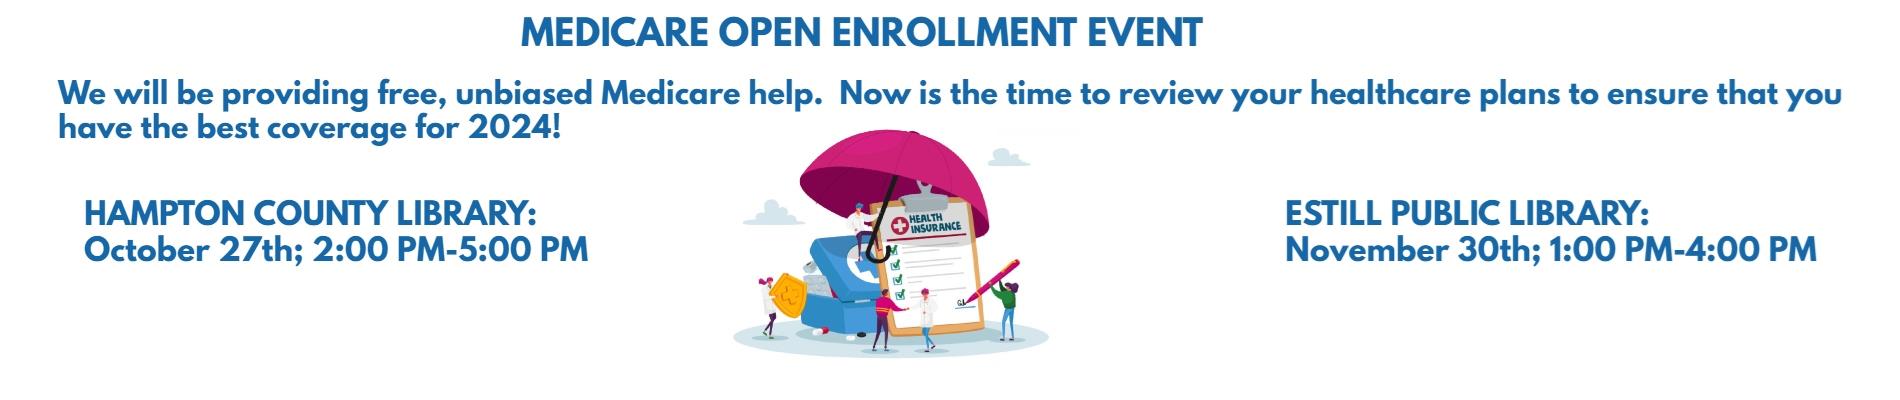 Medicare Open Enrollment Hampton Public Library October 27th 1-4PM and Estill Public Library Nov 30th 1-4 PM  Registration Information